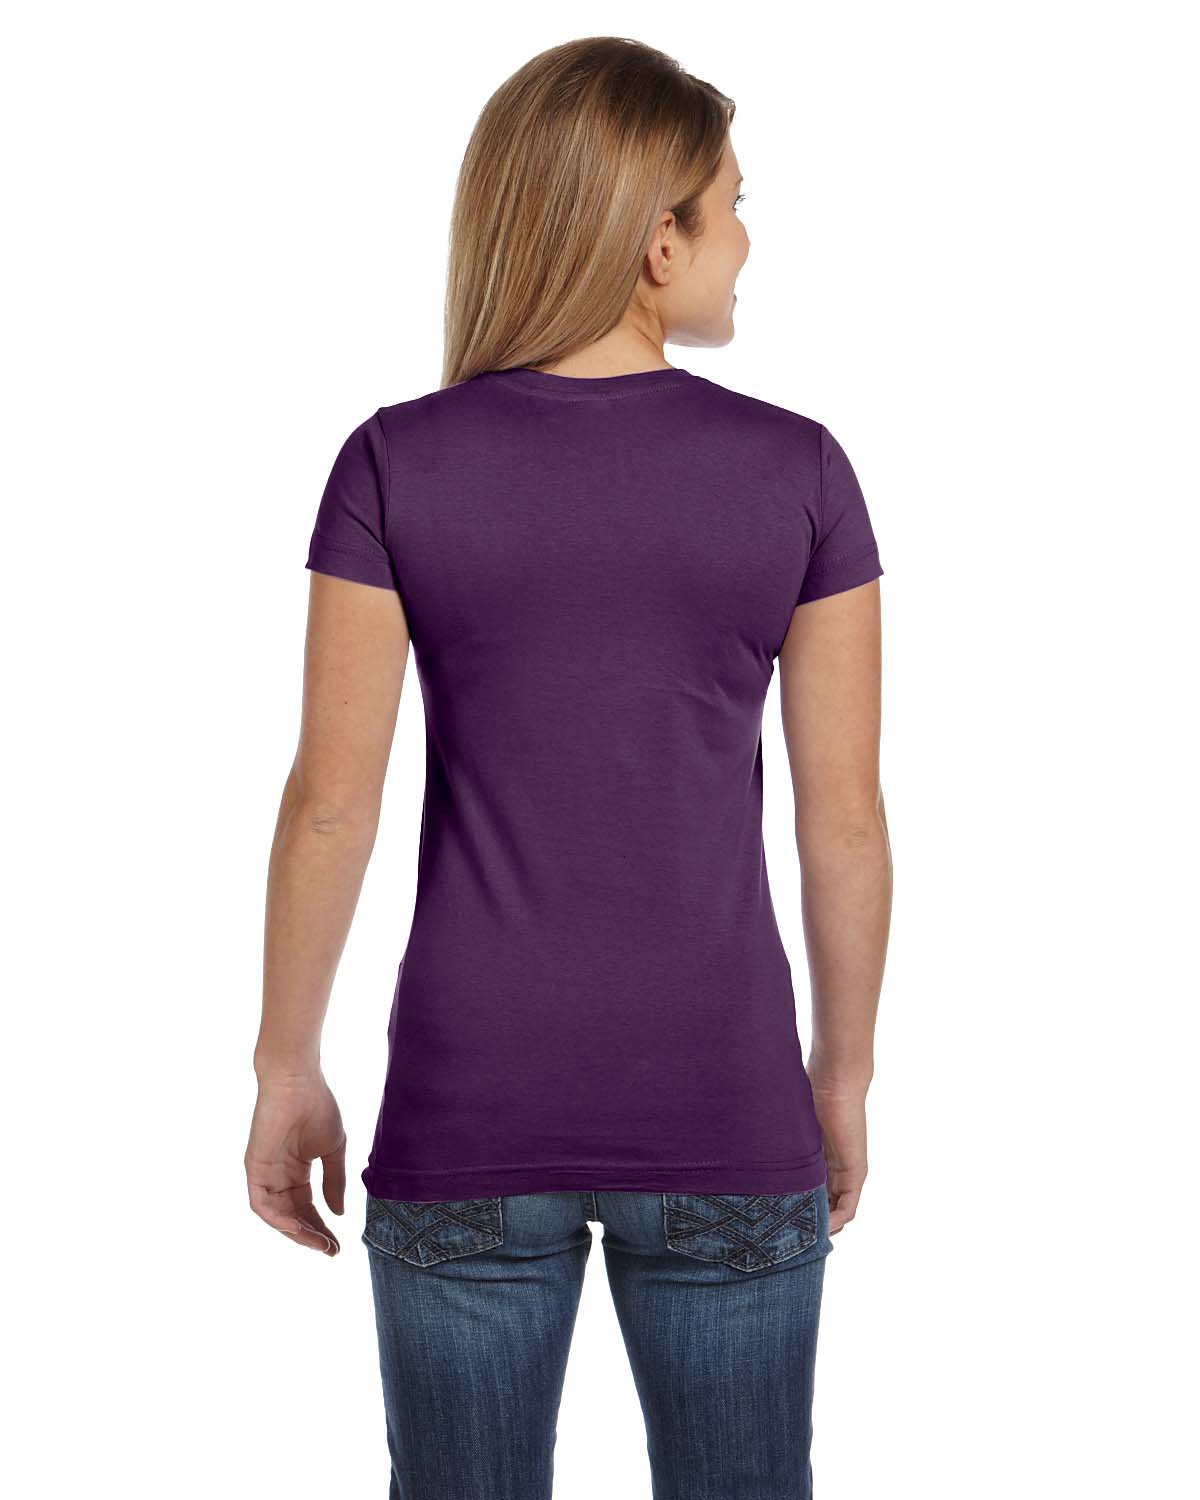 Lat 3607 Women Fine Jersey V-Neck Longer Length T-Shirt | GotApparel.com